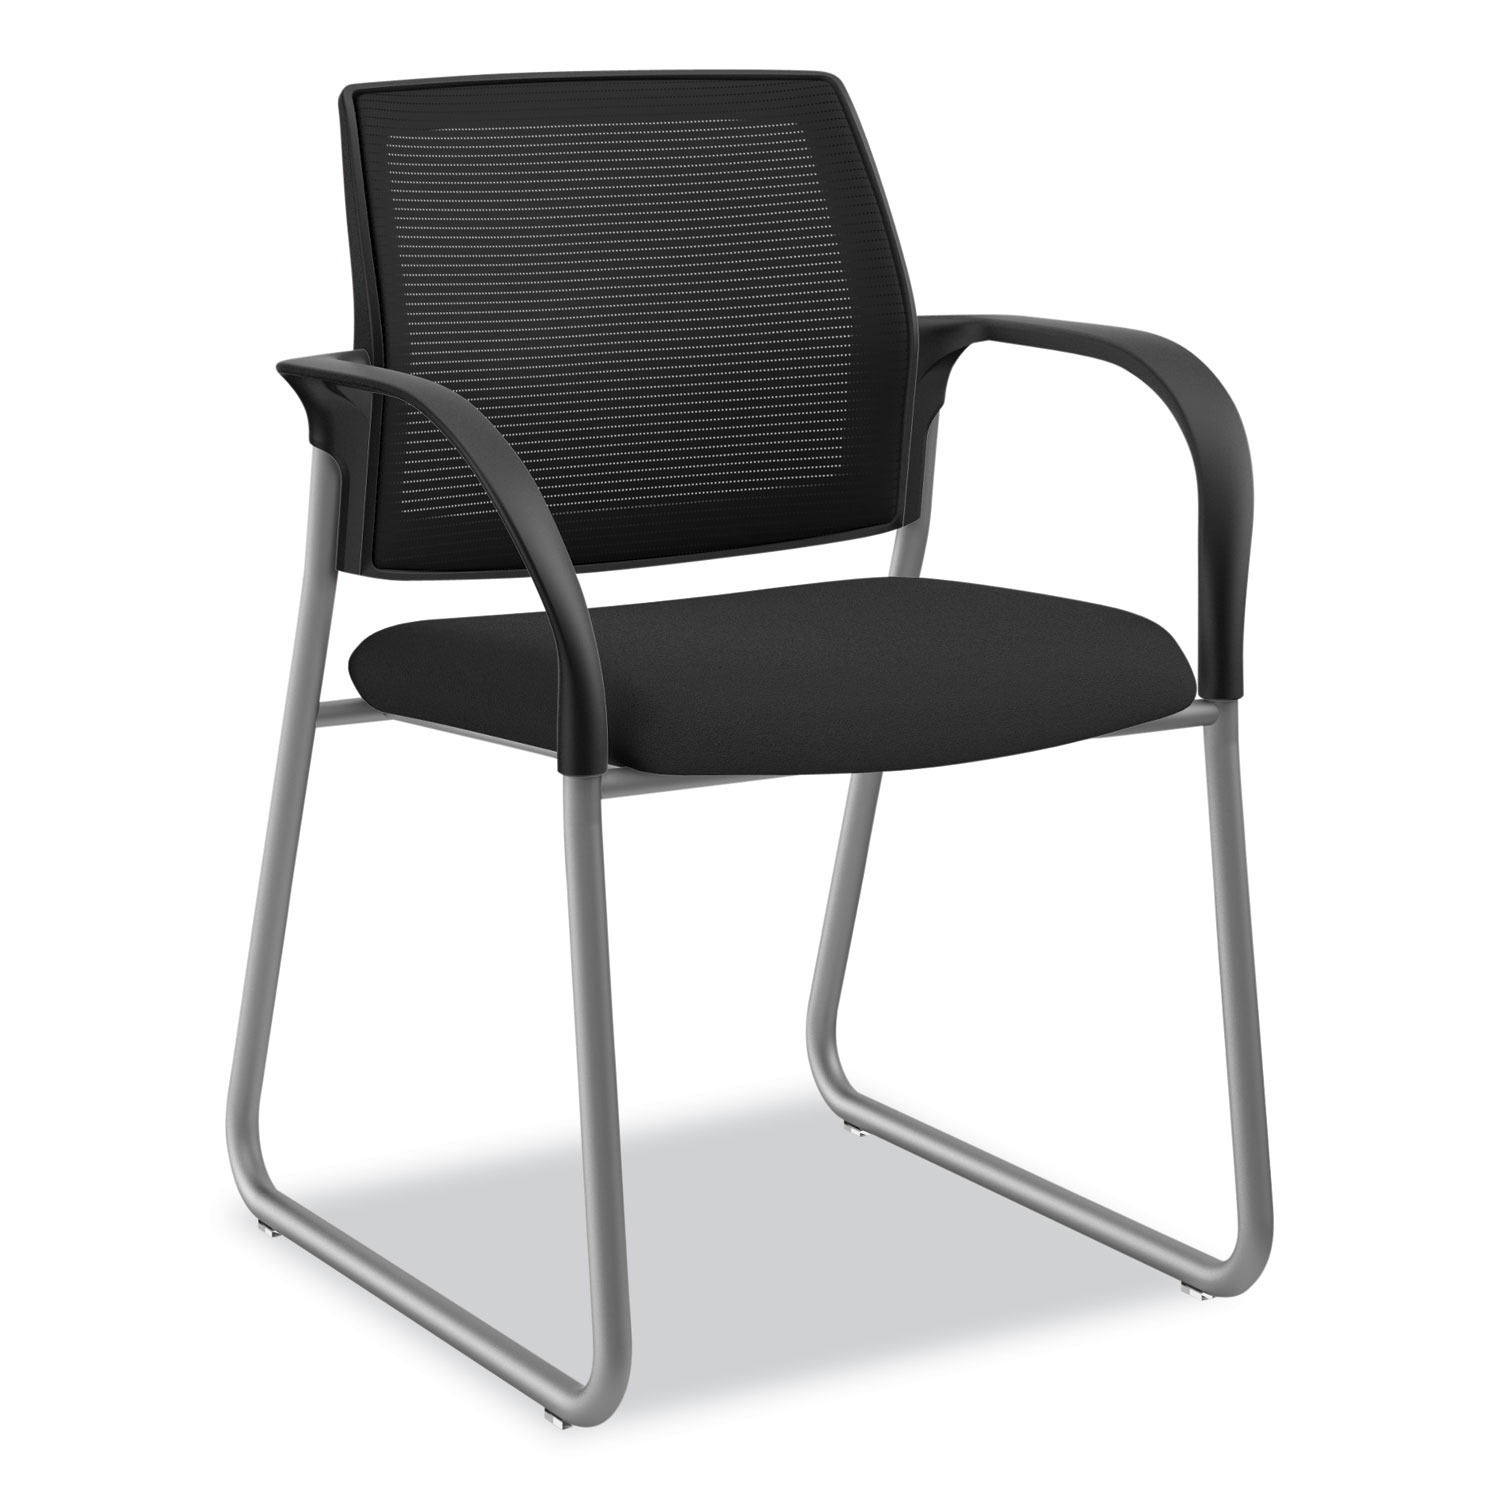  HON HONIB108IMCU10P Ignition Series Mesh Back Guest Chair with Sled Base, 25 x 22 x 34, Black Seat, Black Back, Platinum Base (HONIB108IMCU10P) 